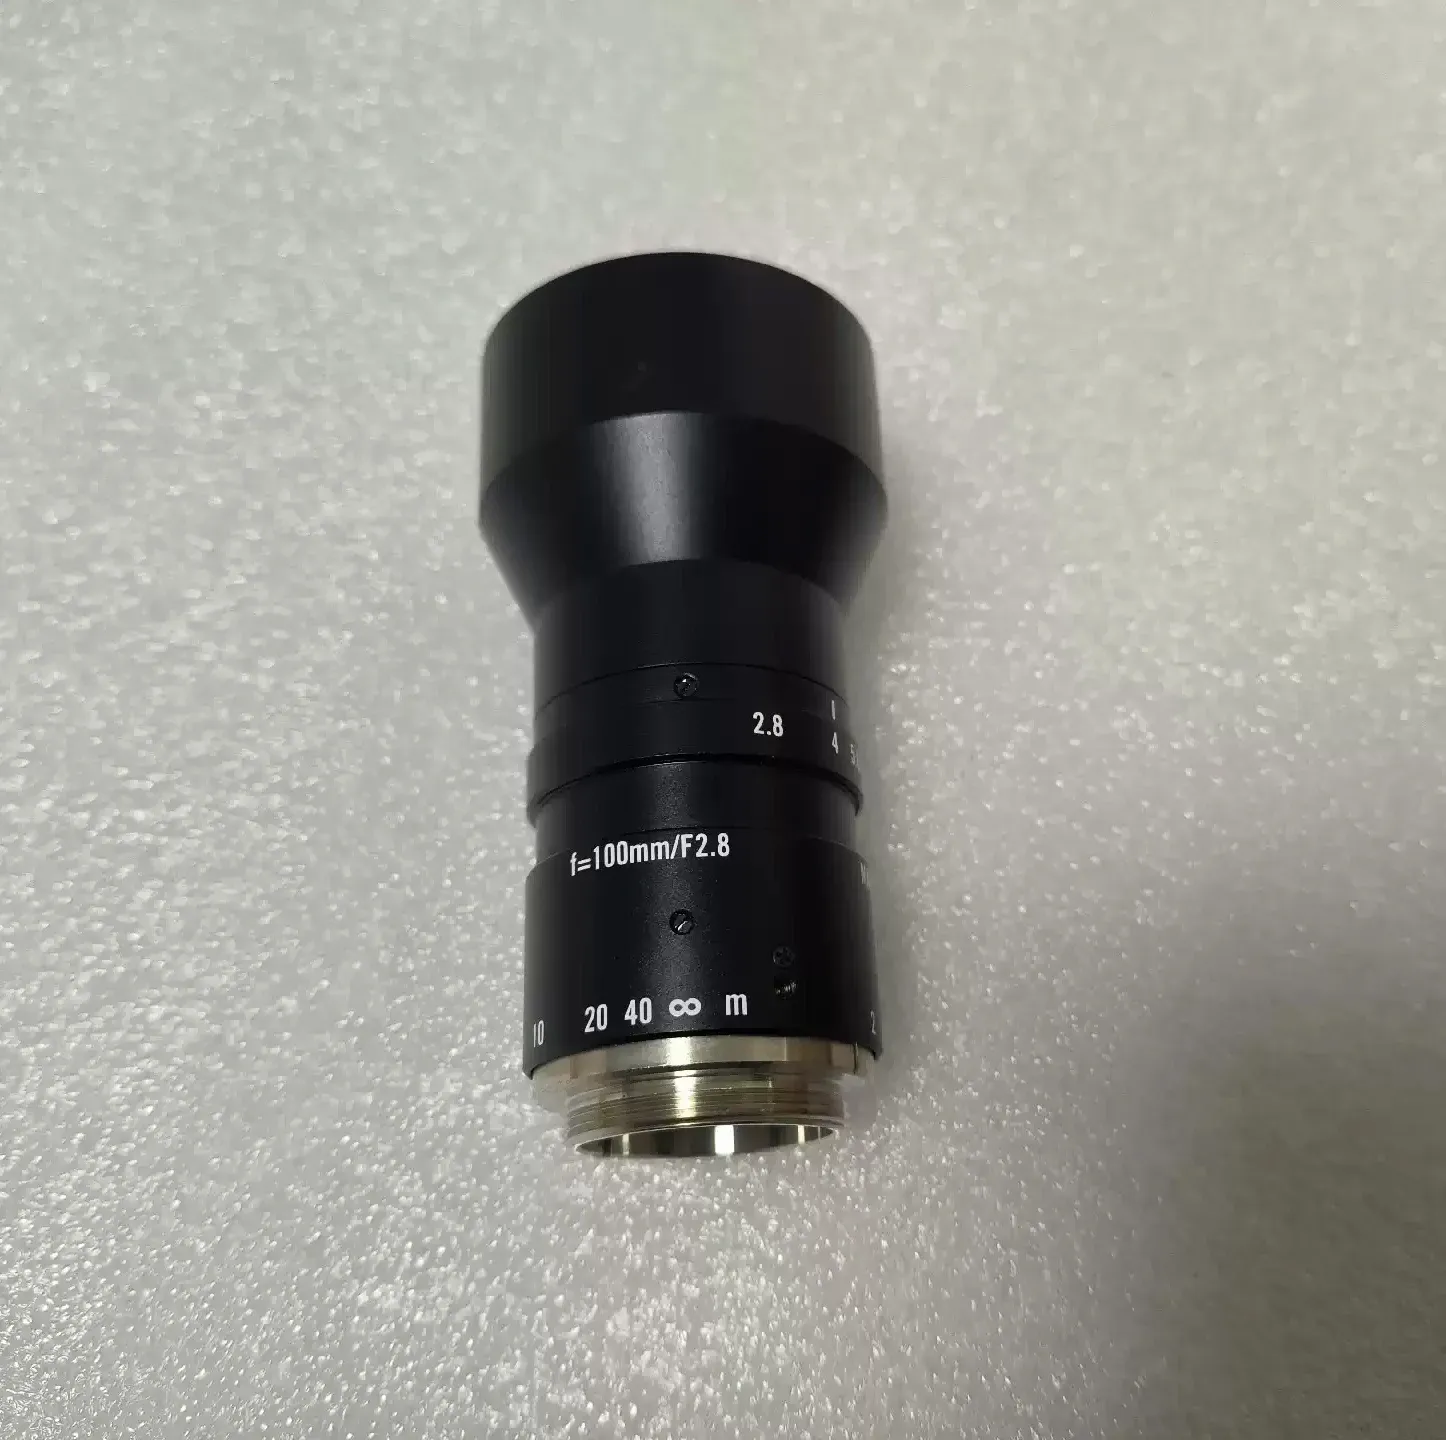 Filter Kowa Industrial Lens Model: LM100JC Industry Camera Lens Fa Lens Machine Vision Lens i gott skick Testat OK